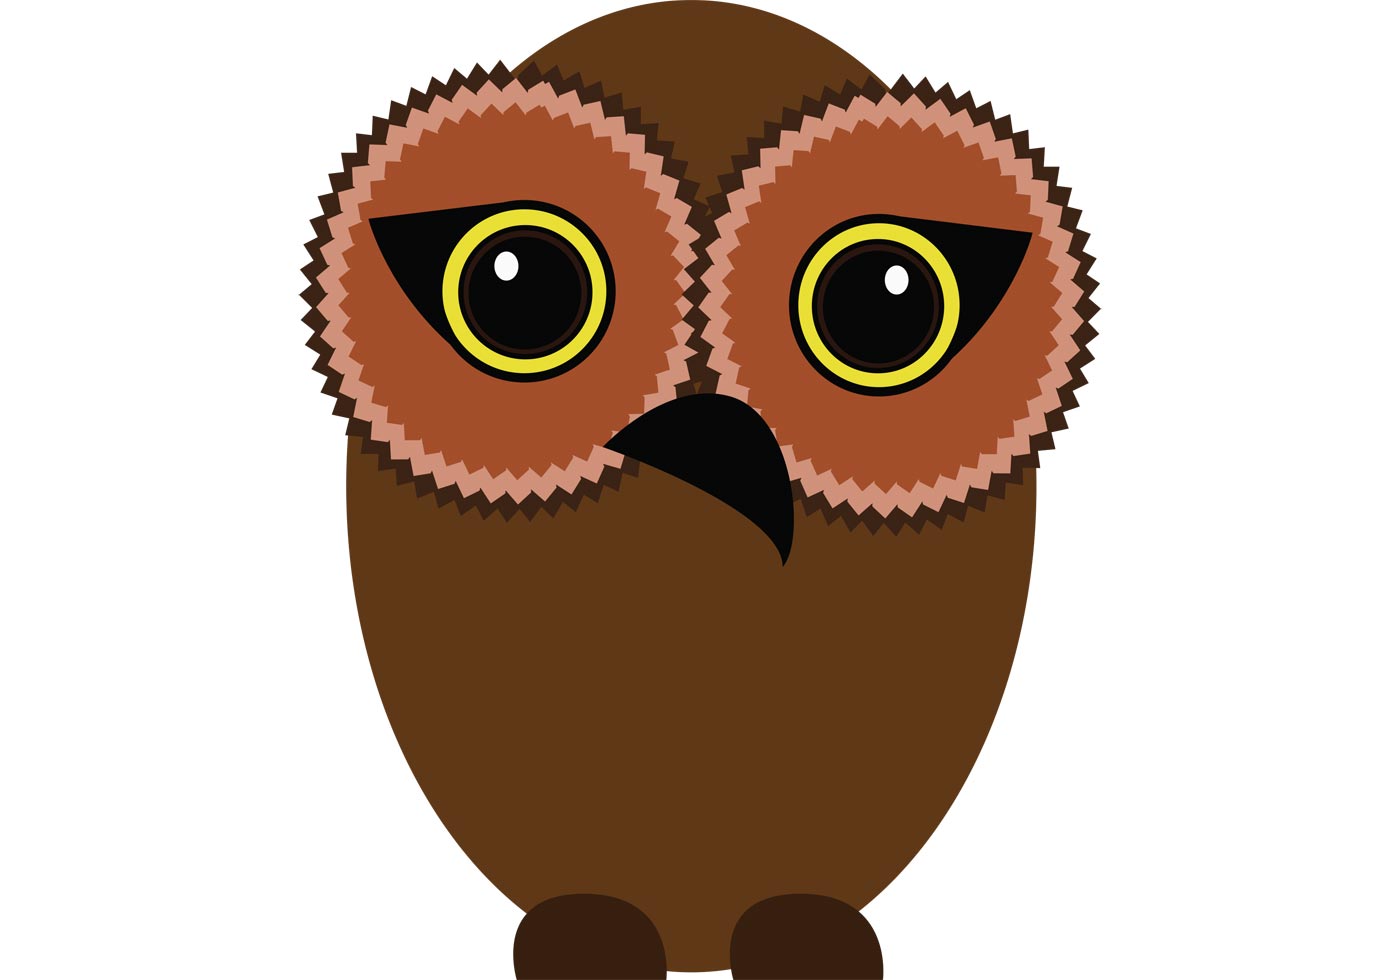 Owl Free Vector Art - (8971 Free Downloads)